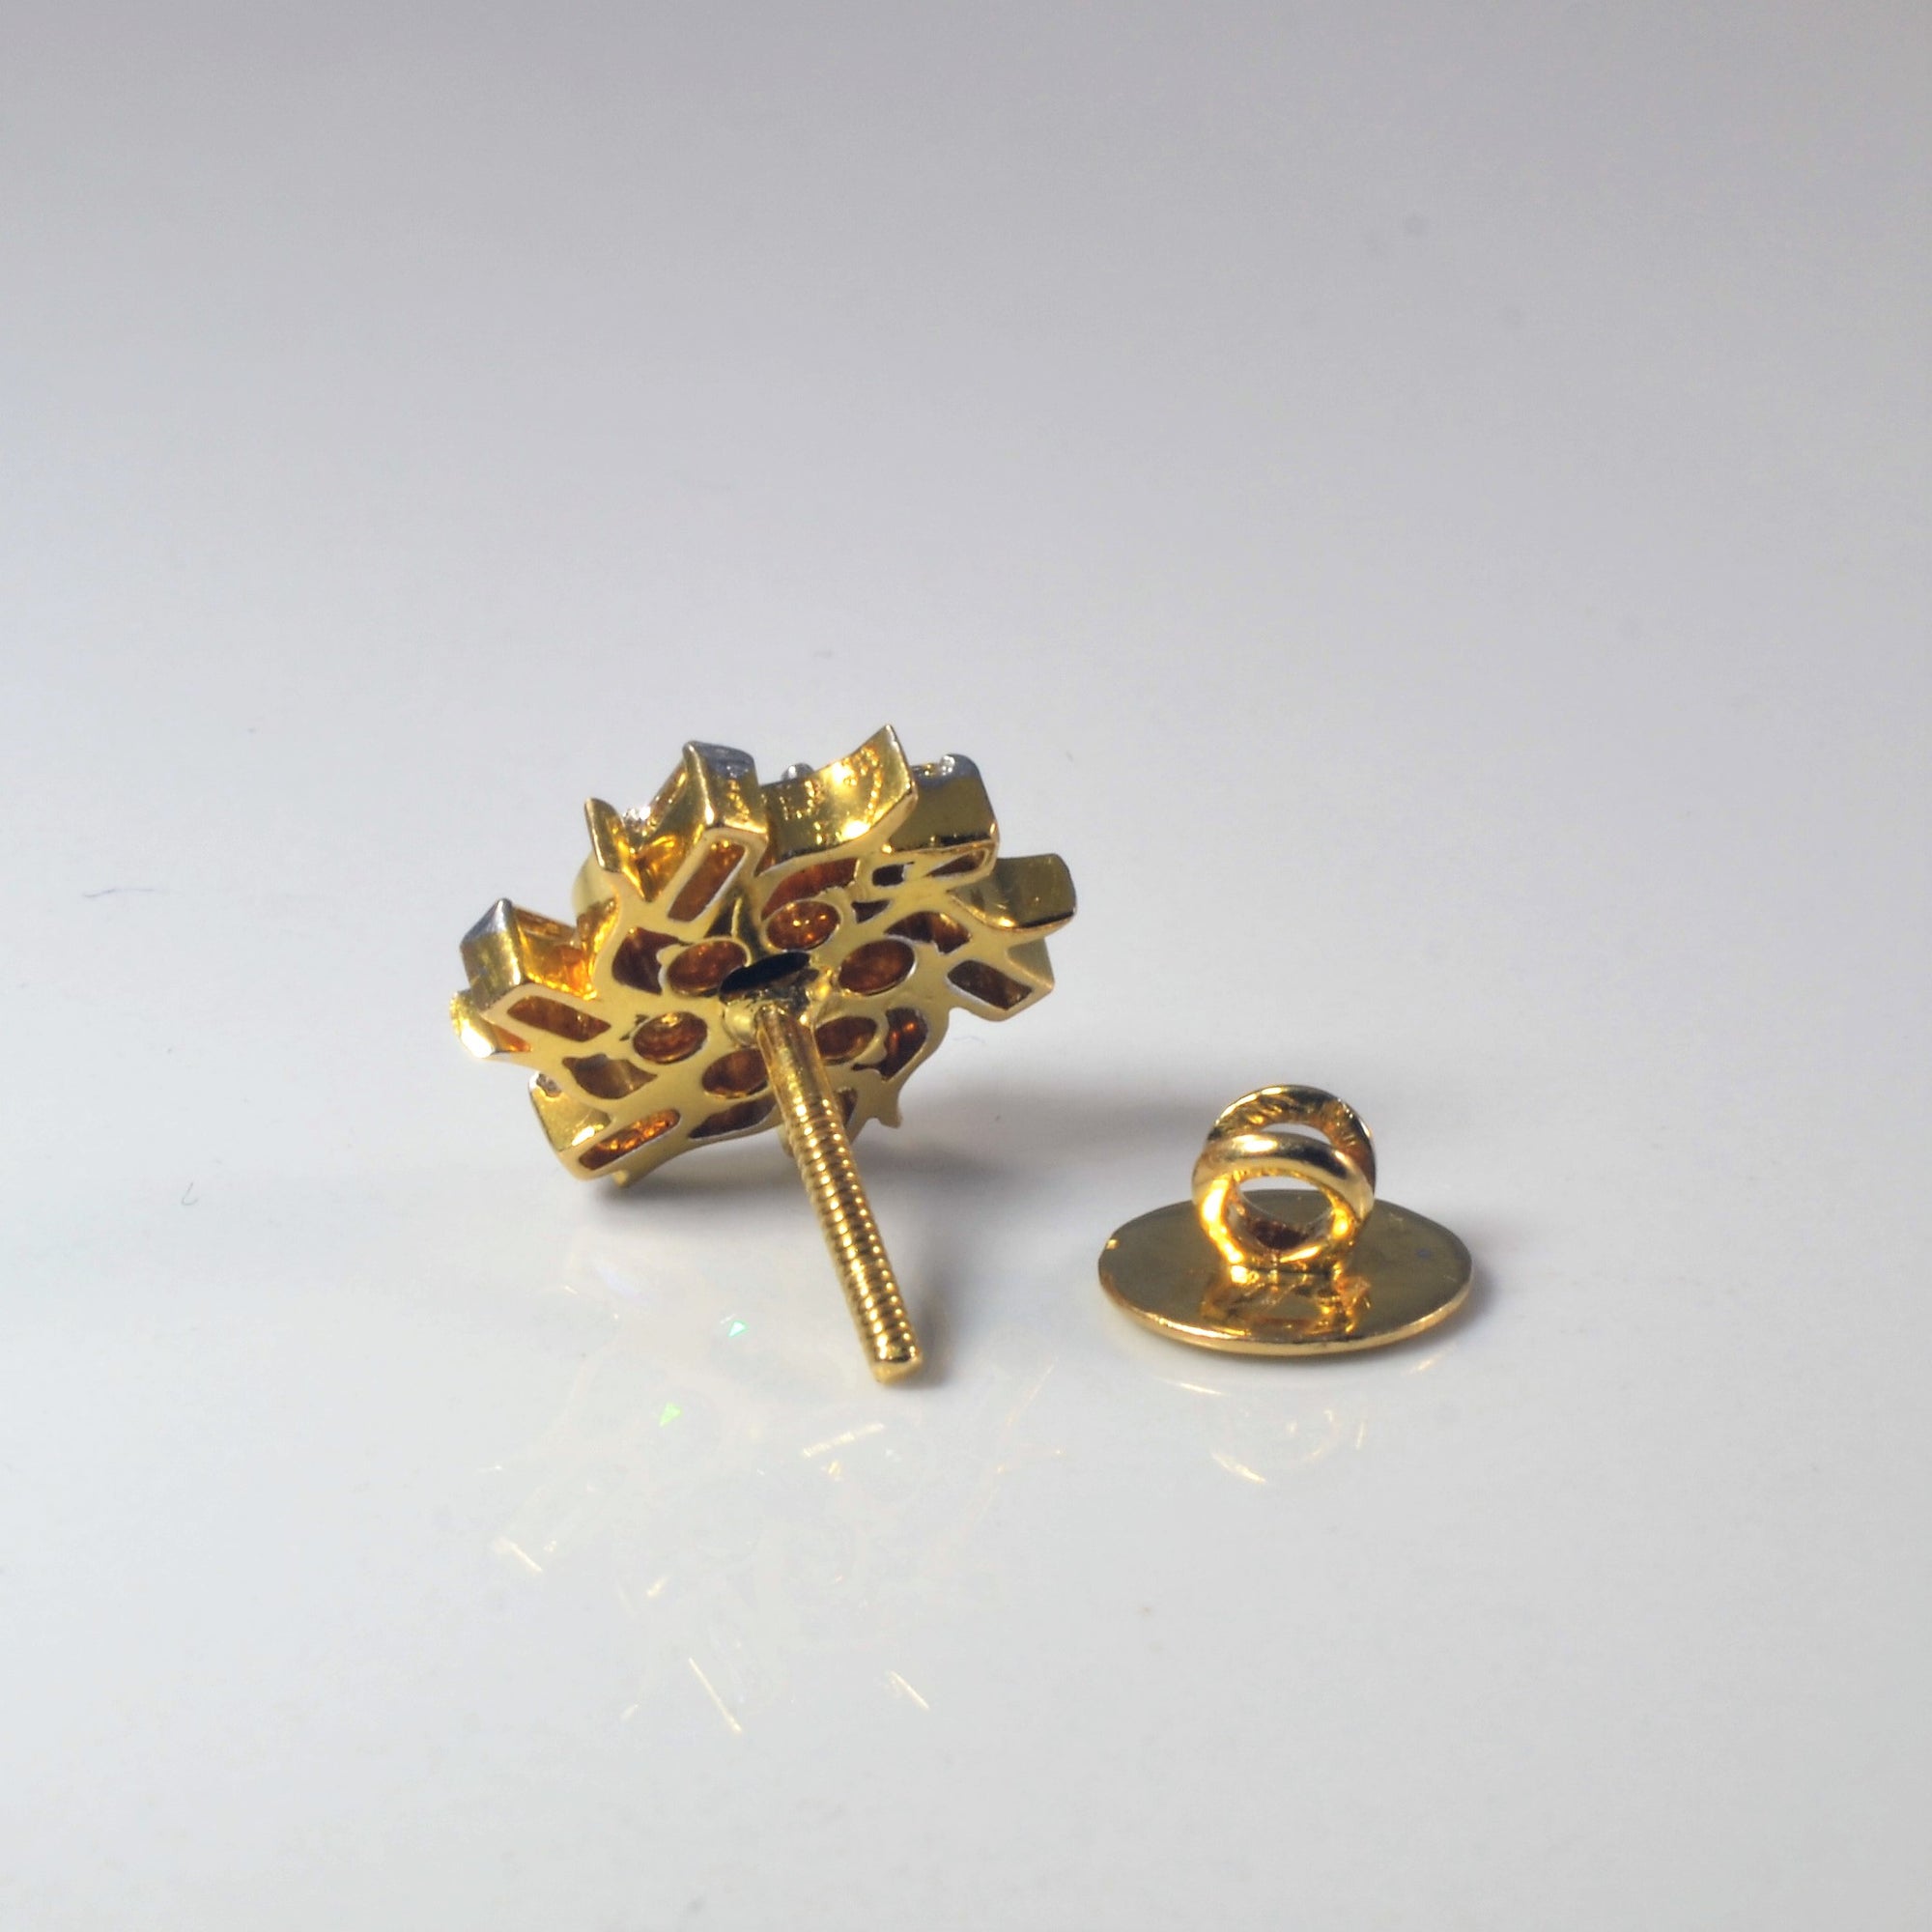 Cluster Diamond Necklace & Earring Set | 2.49ctw | 18